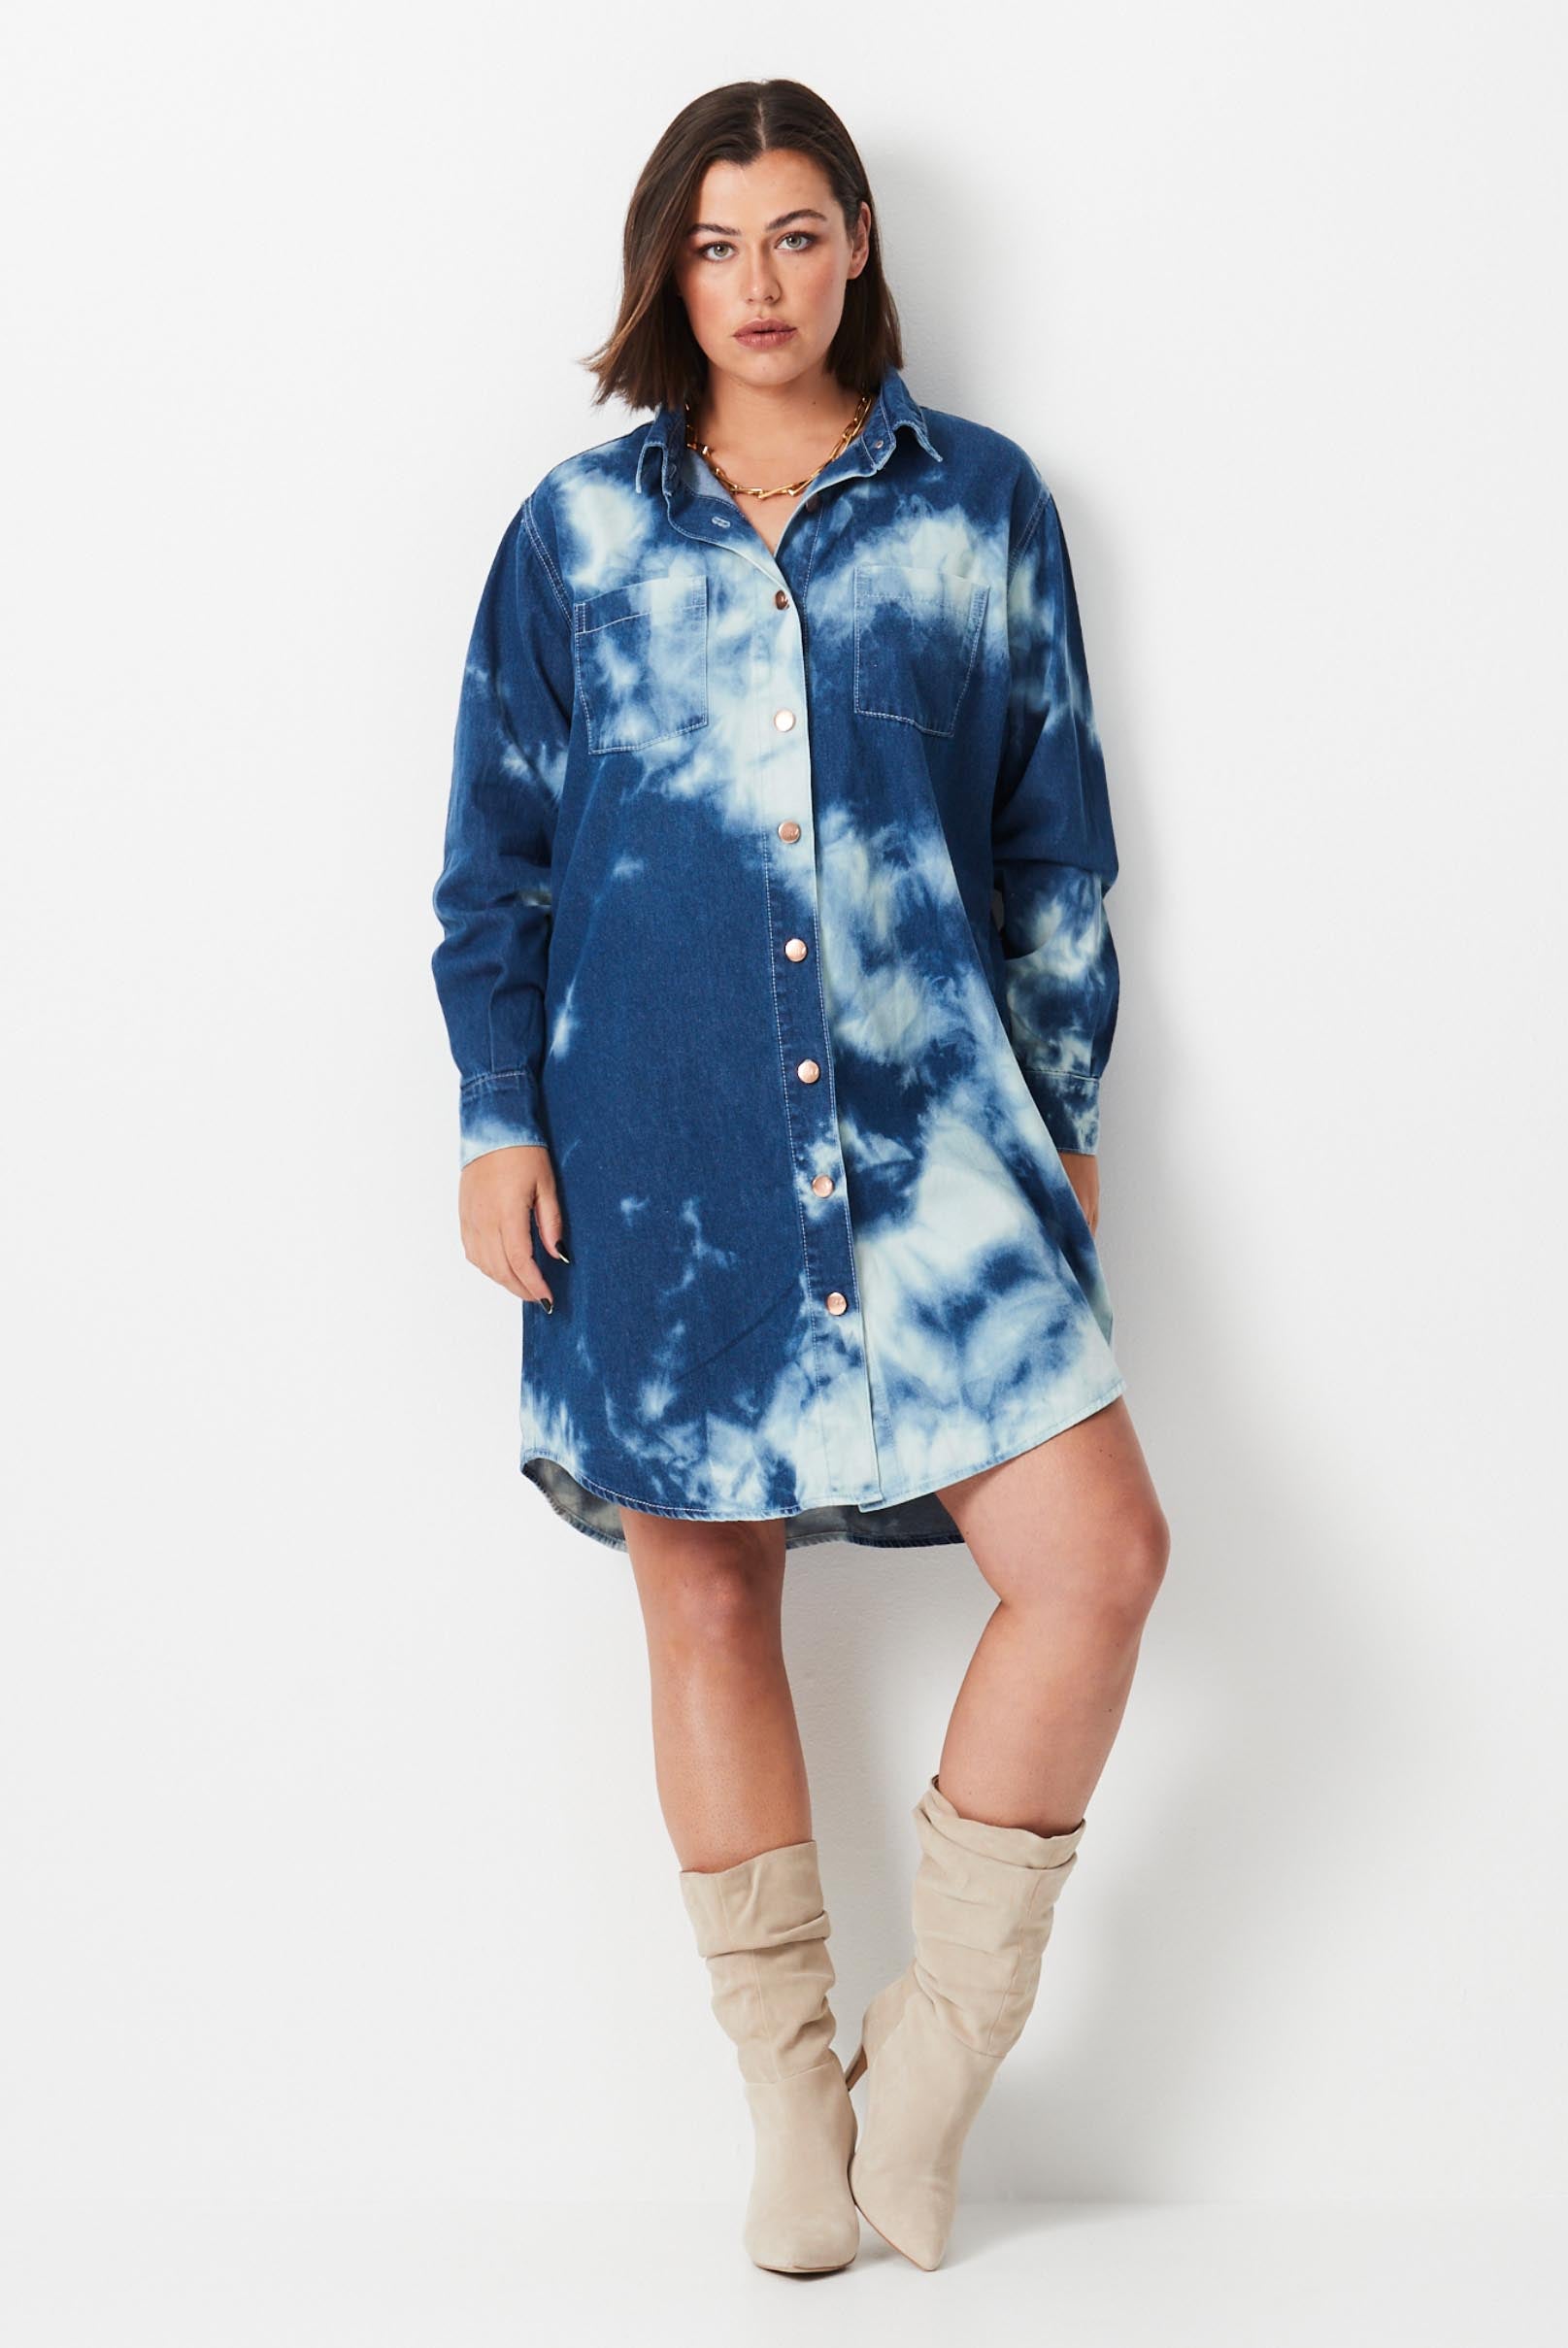 Model wears plus size shirt dress made from blue and white shibori dye denim